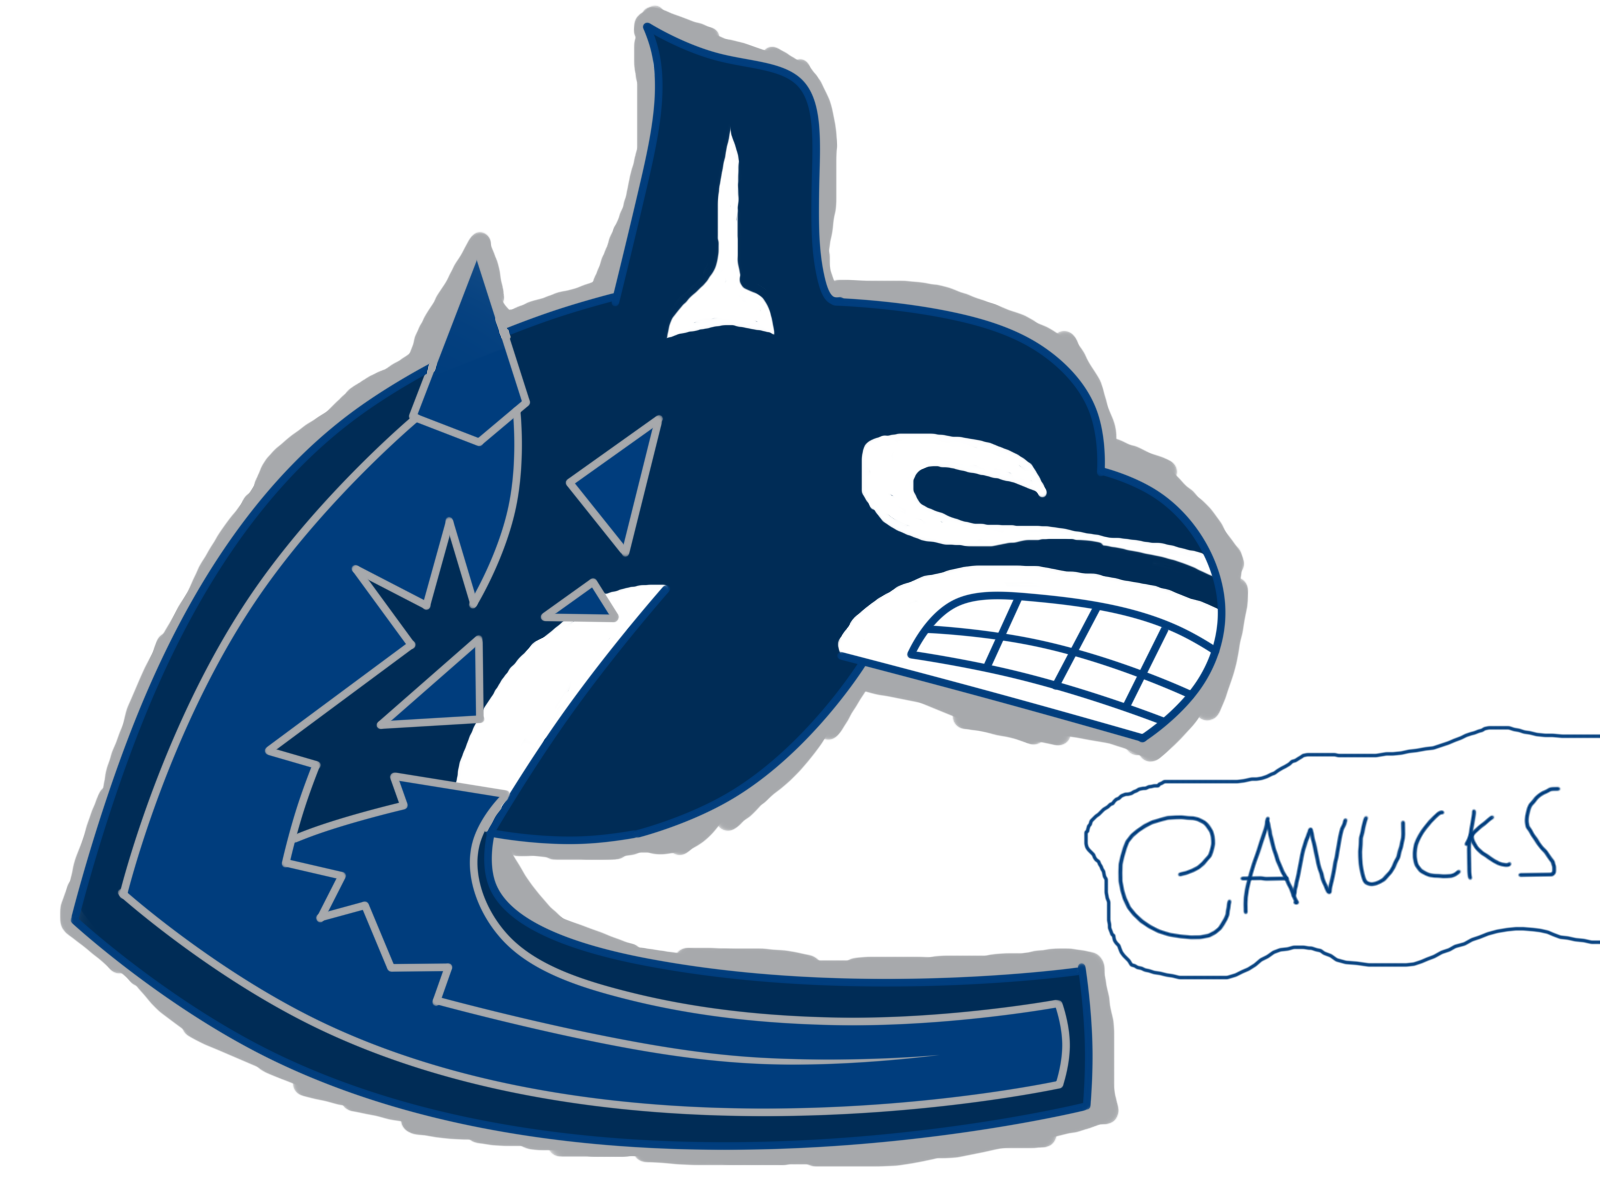 Vancouver Canucks - Wikipedia